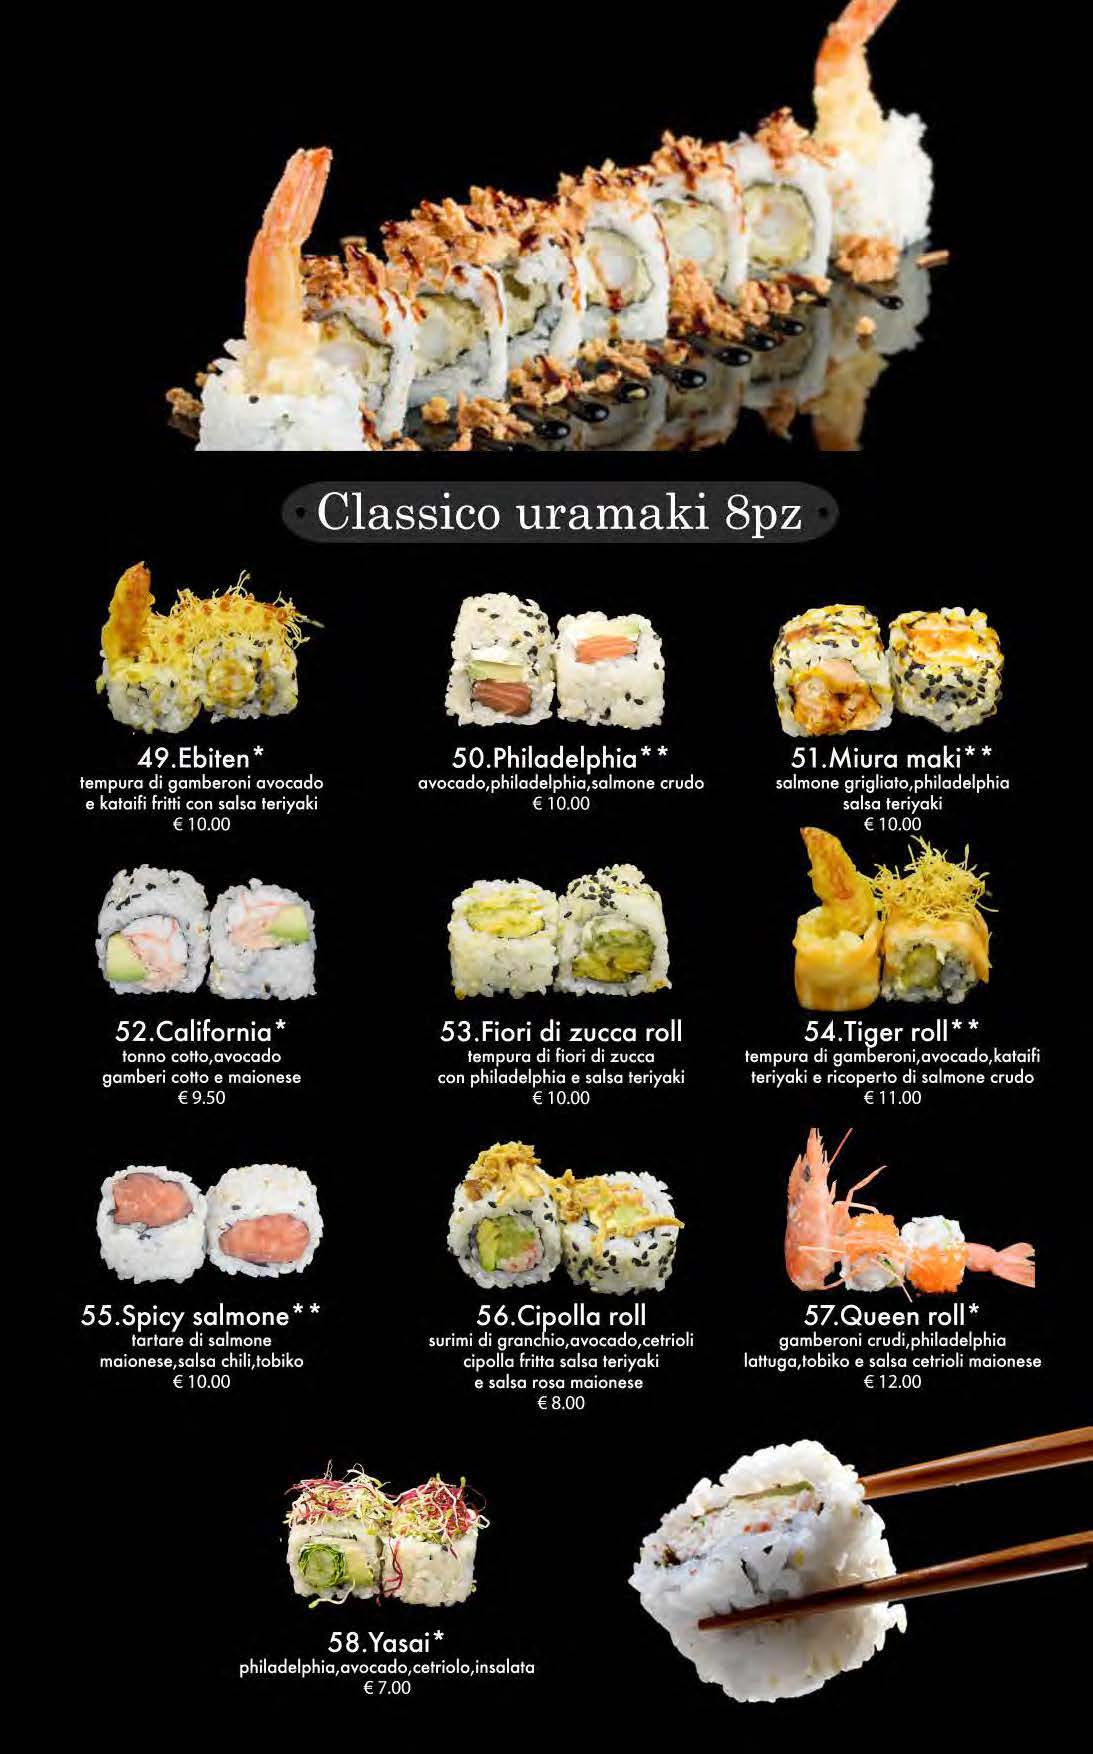 attimi ristorante giapponese padova menù cena pagina 07 uramaki